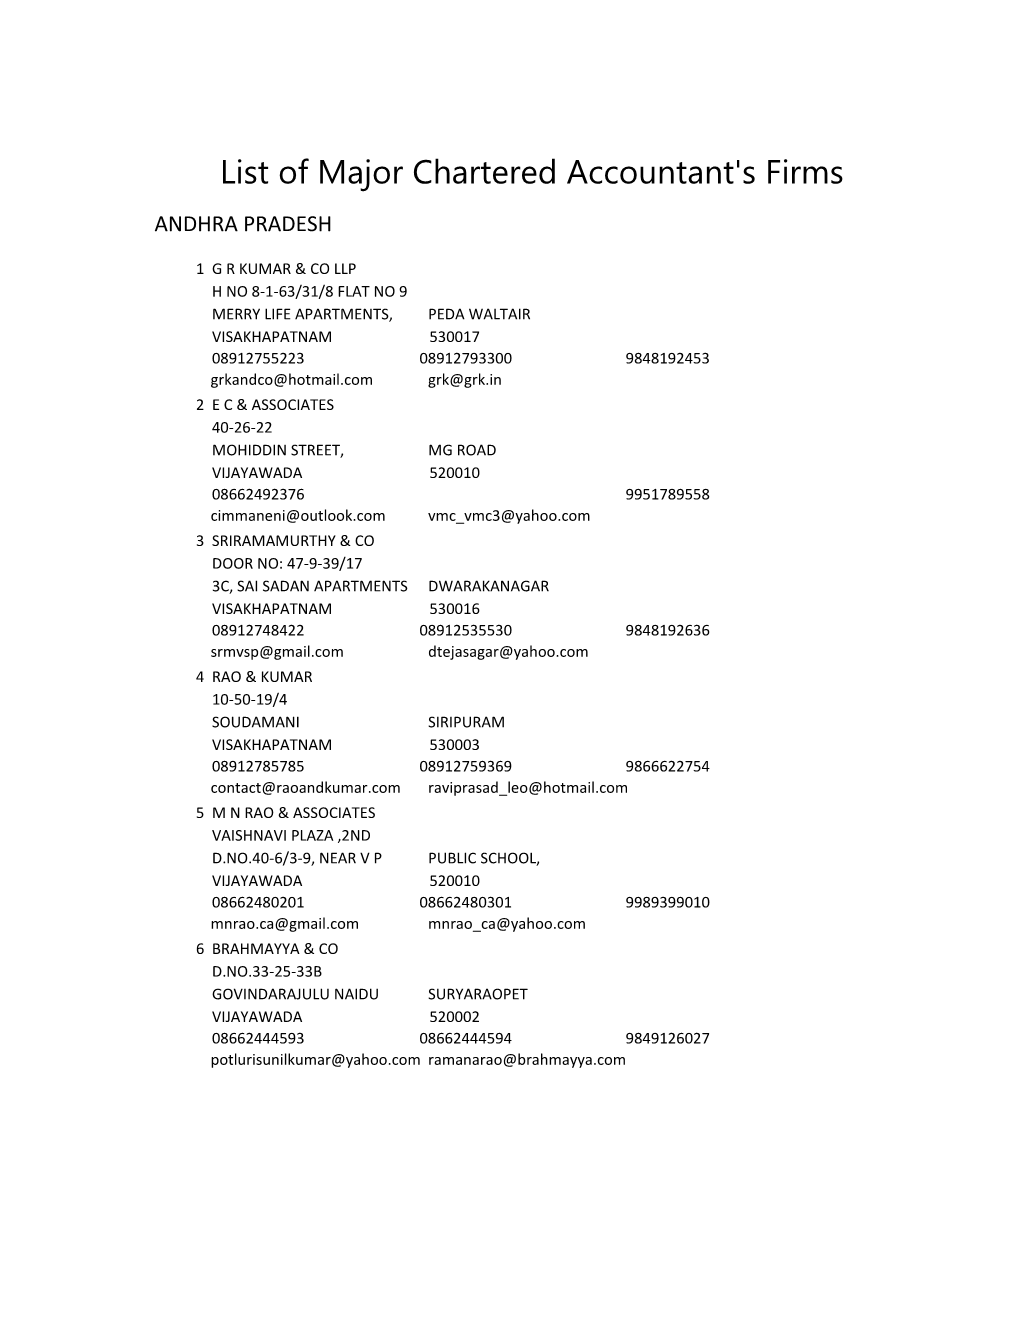 List of Major Chartered Accountant's Firms ANDHRA PRADESH